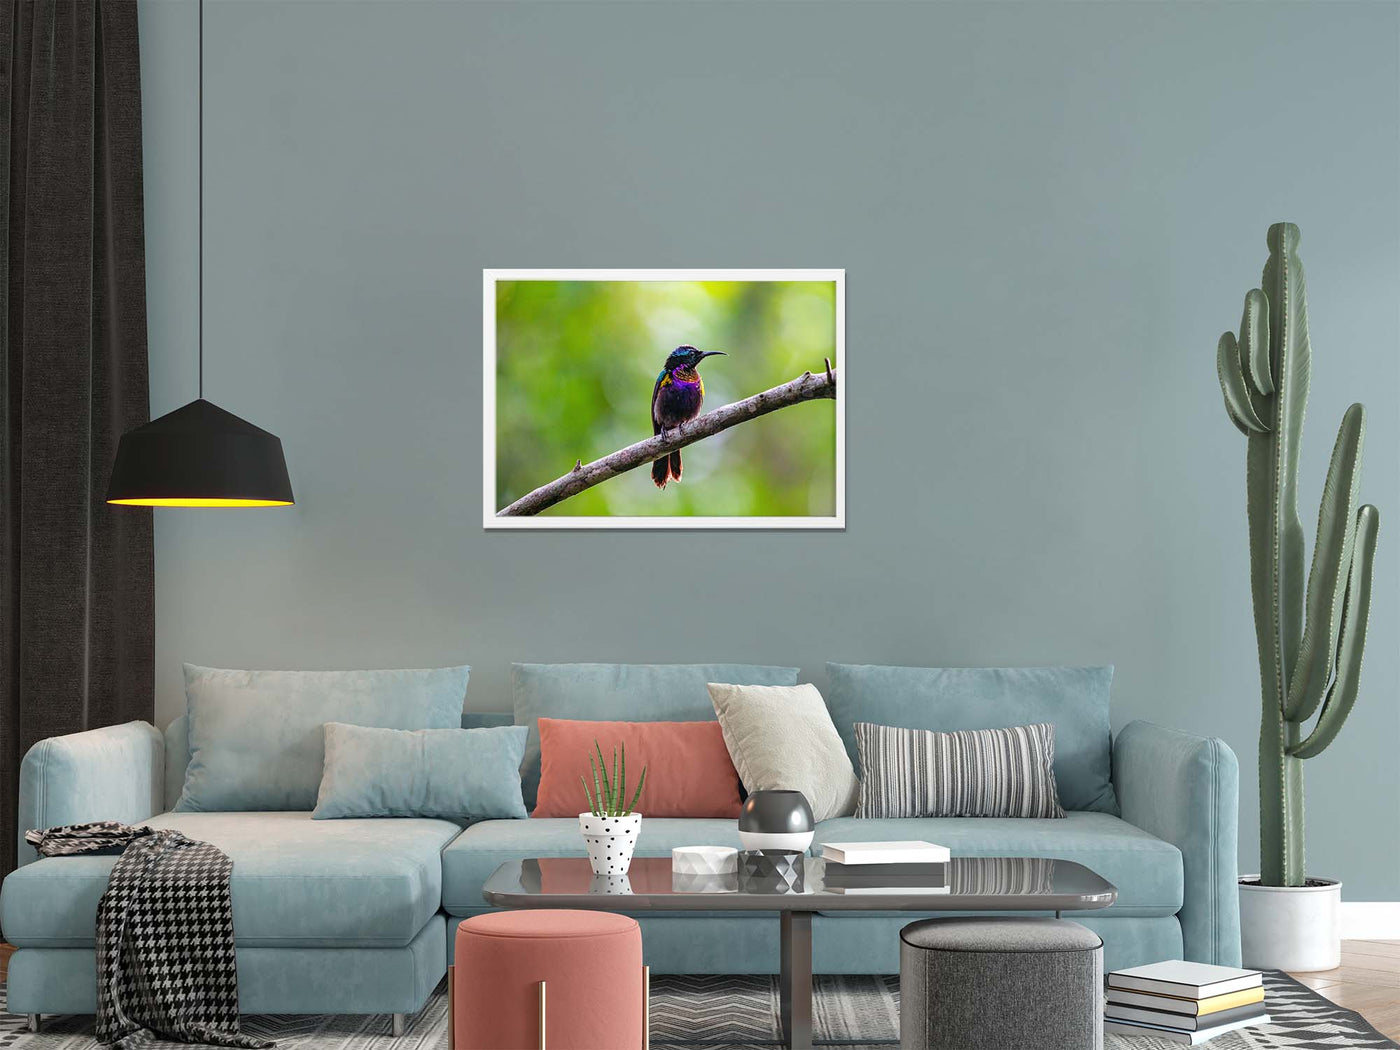 Copper Throated Sunbird (Framed Prints)